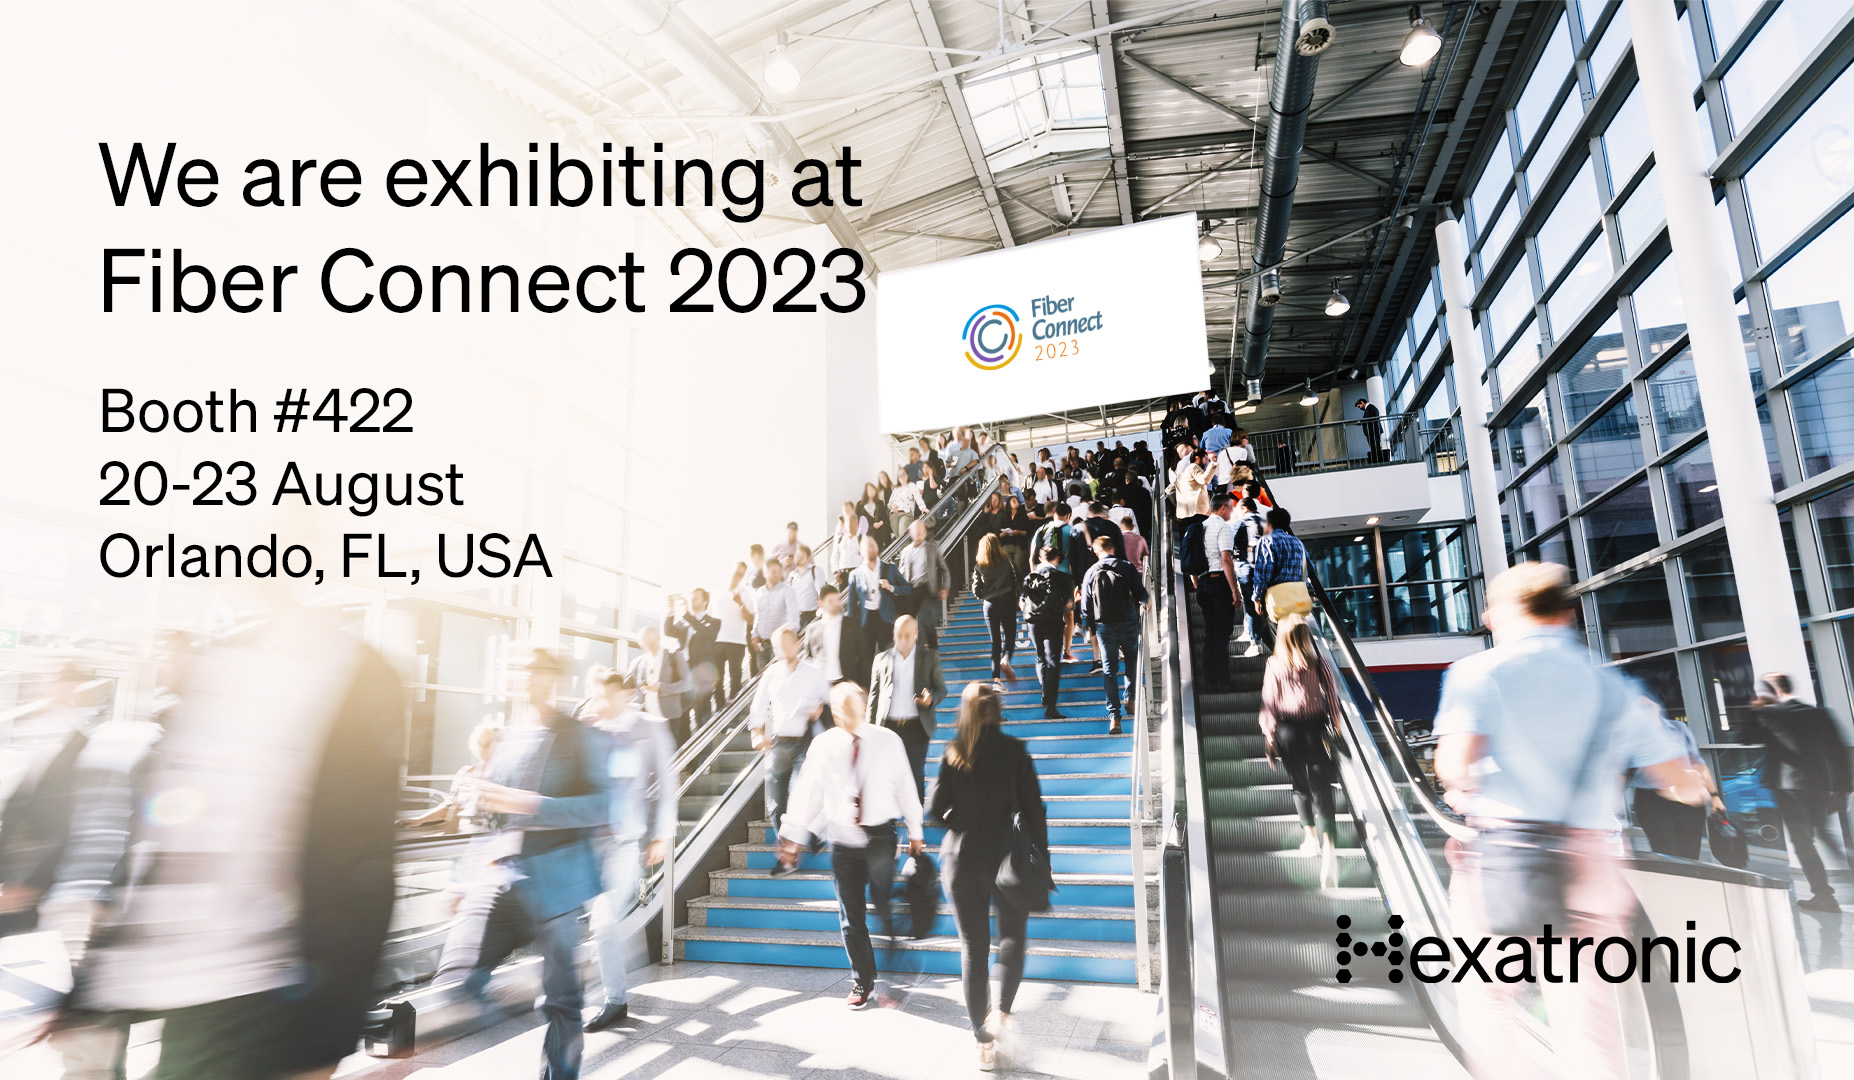 Hexatronic will attend Fiber Connect 2023